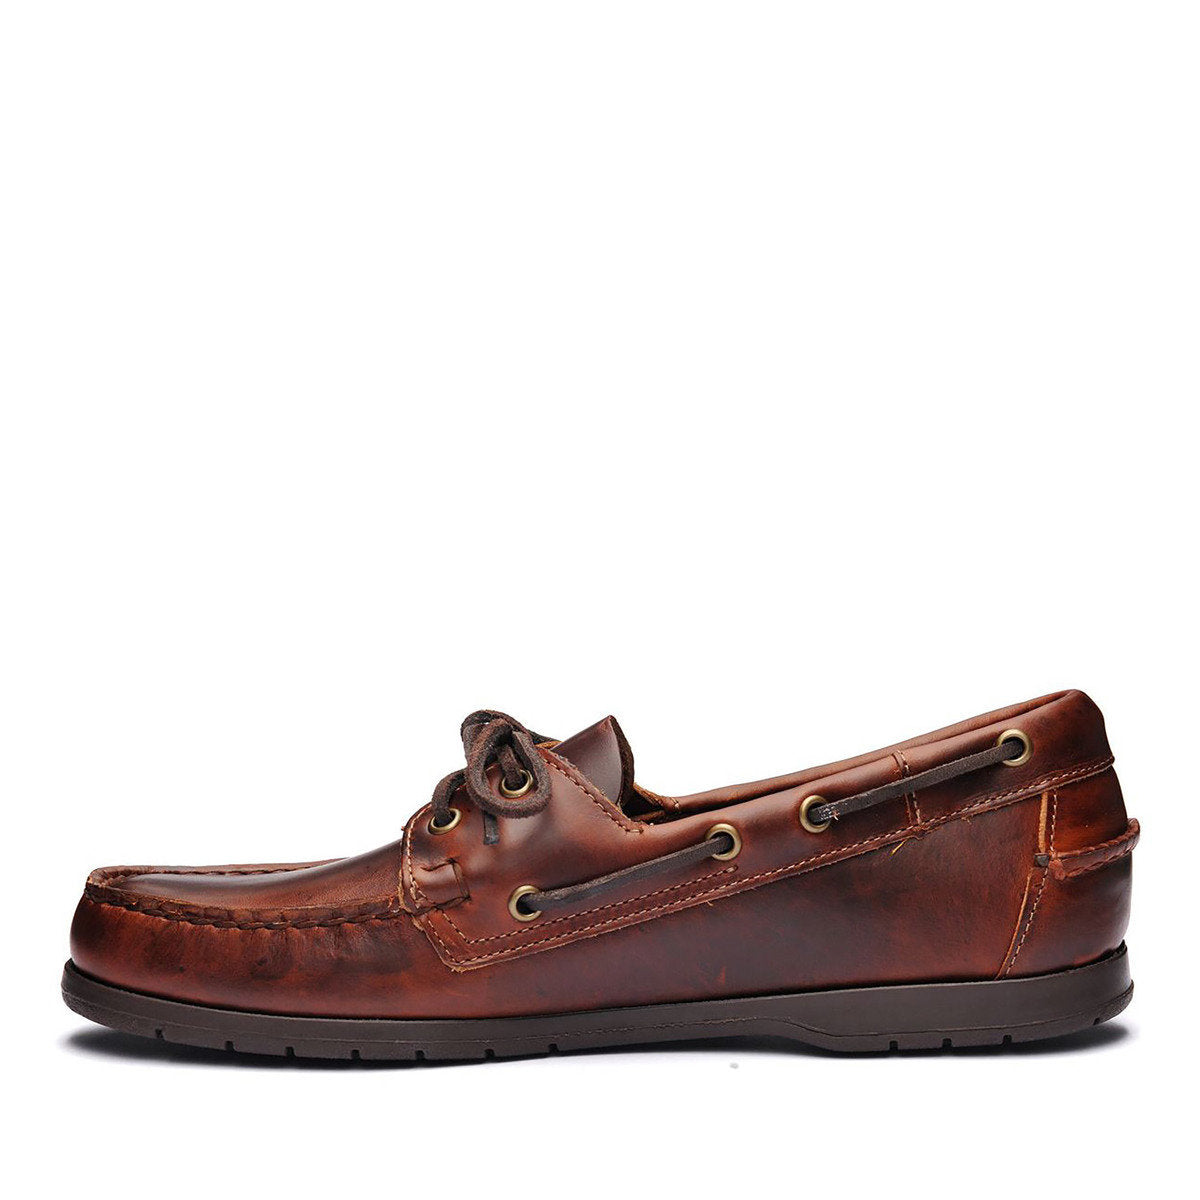 Sebago Men's 7000GC0 Endeavor Waxed Leather Boat Shoes Brown Gum